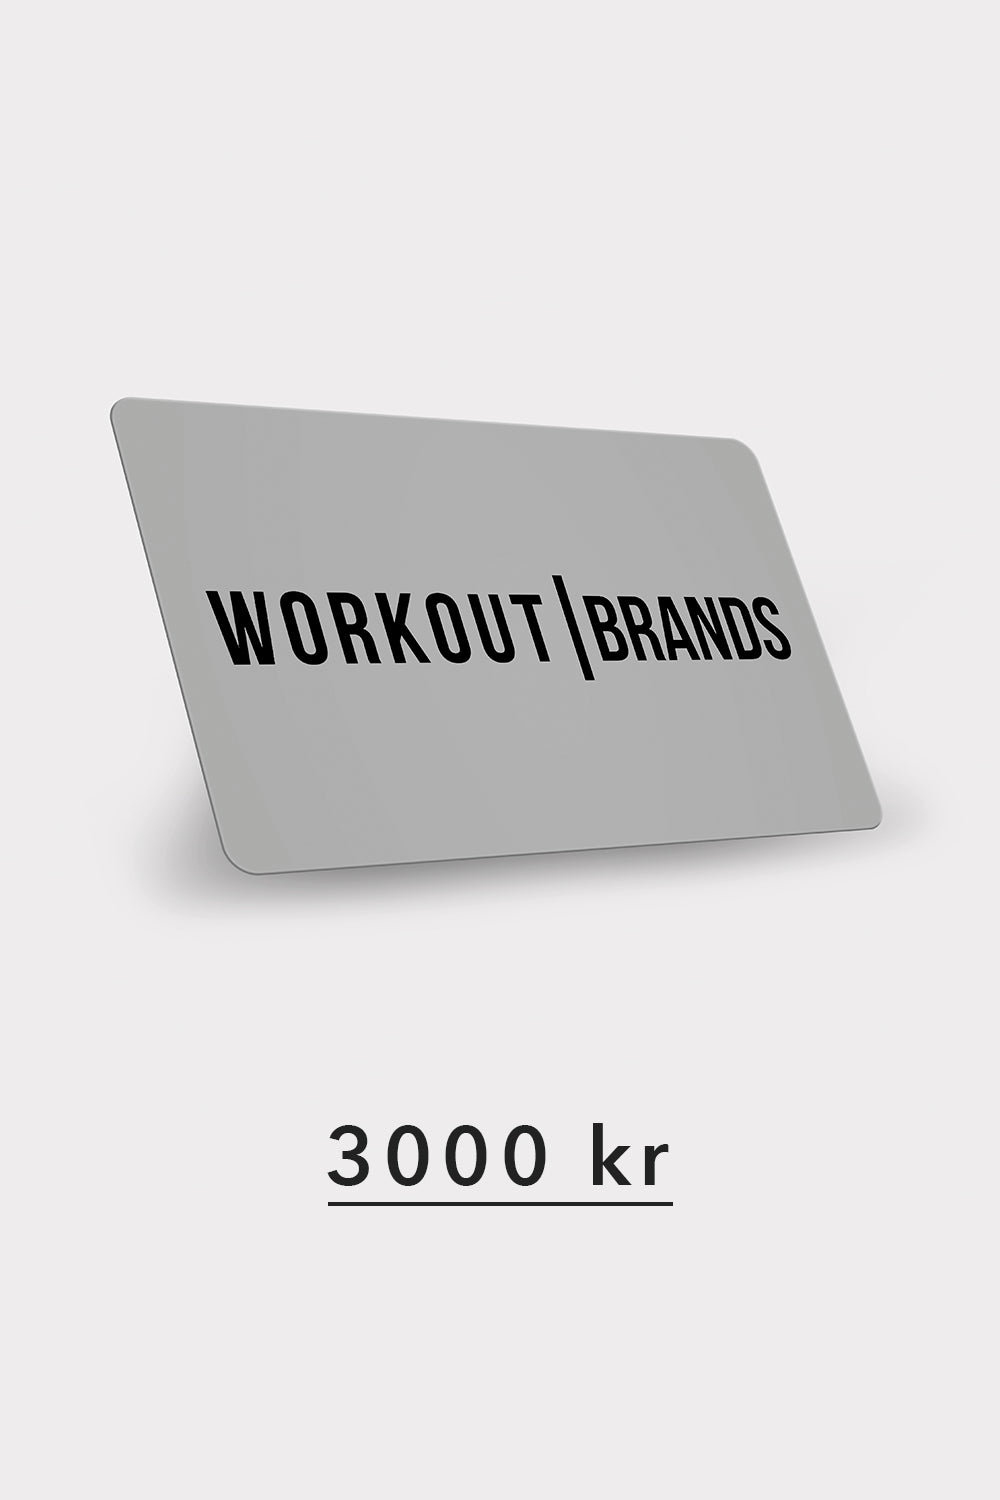 Workout Brands de vale-presente 